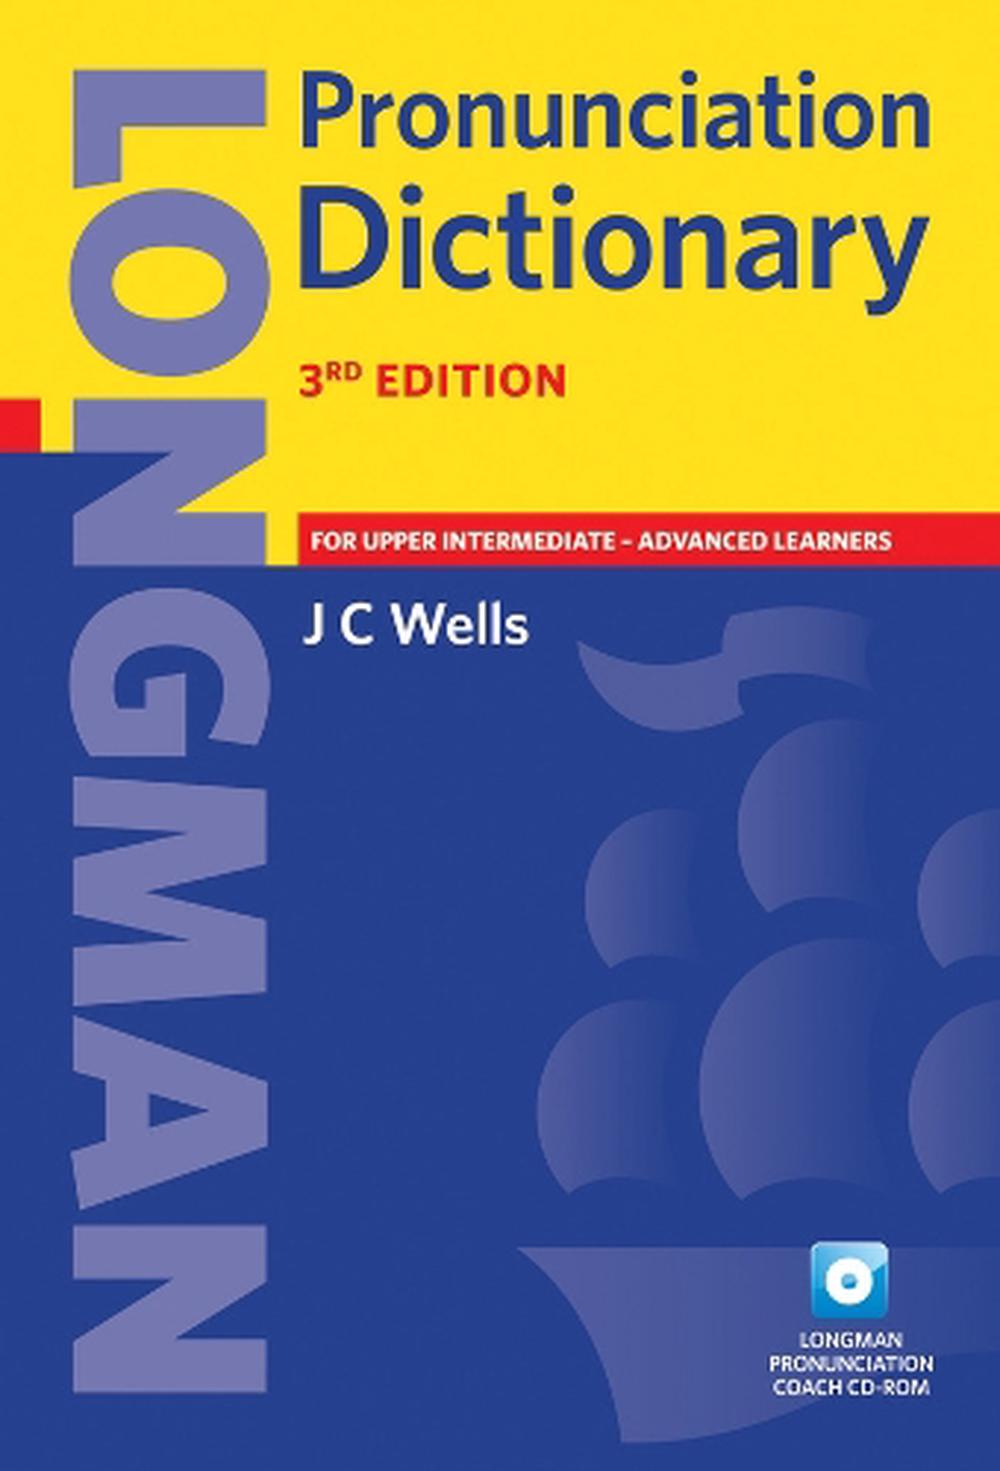 dictionary longman pronunciation